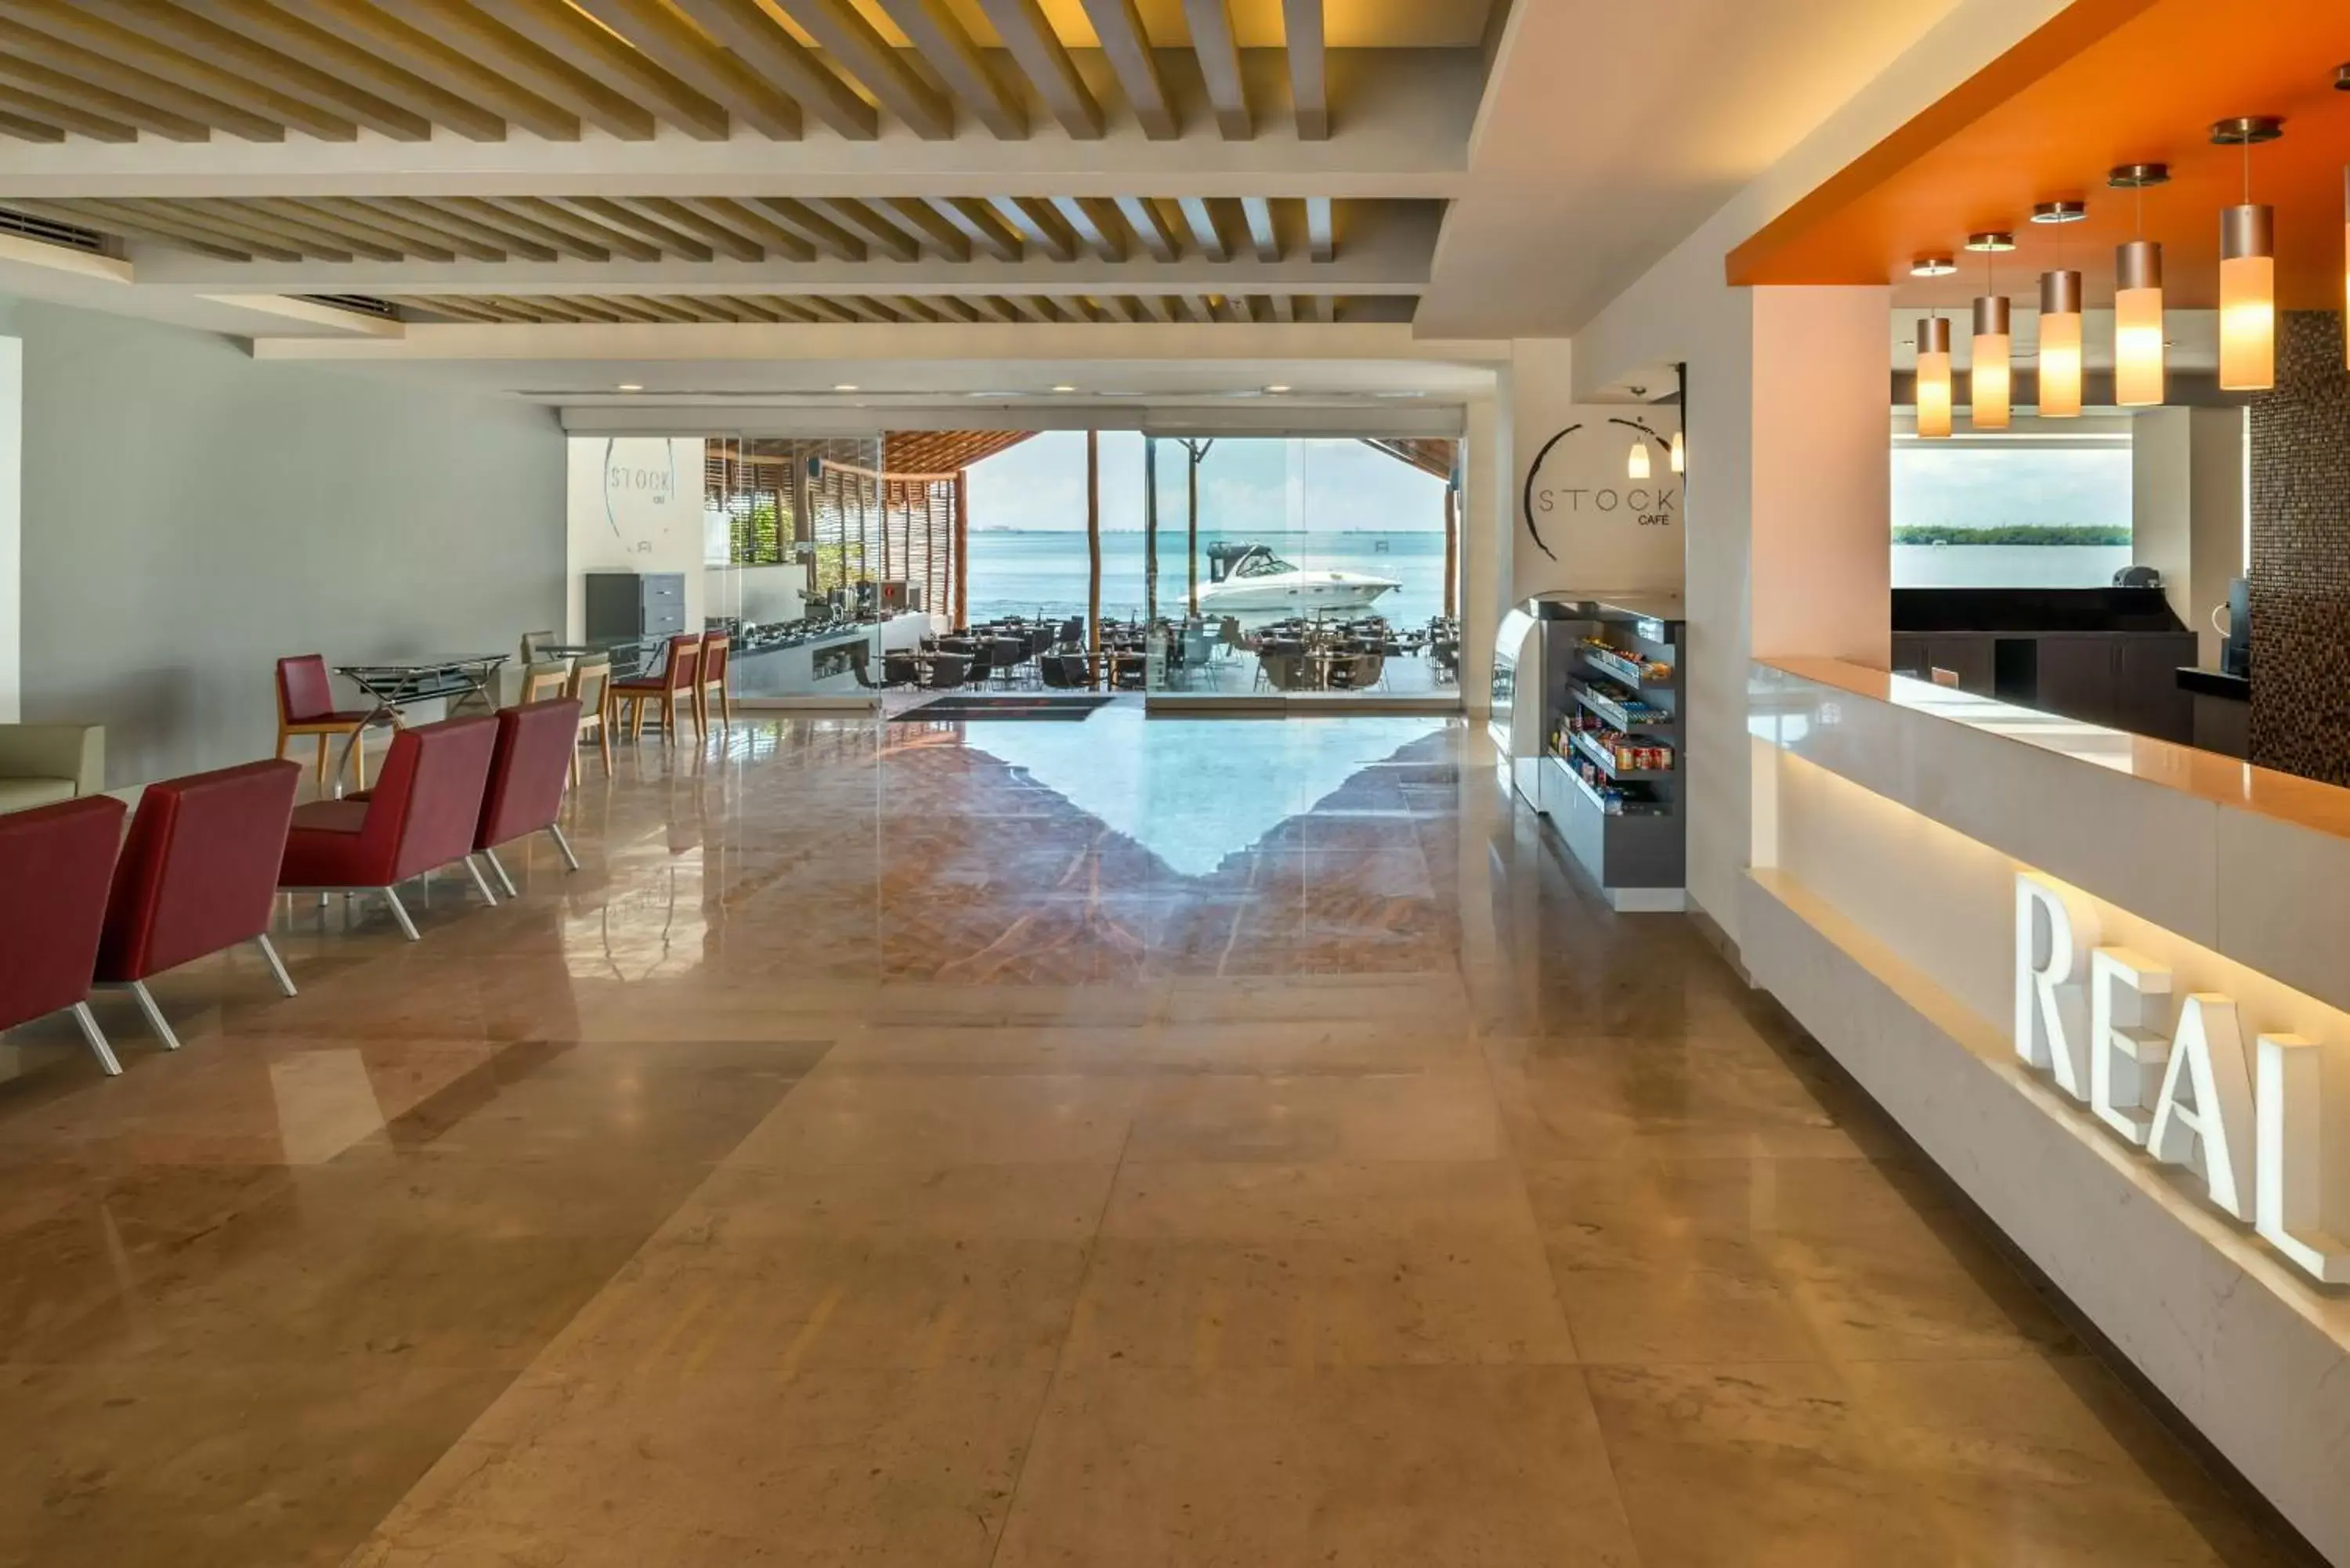 Lobby or reception in Real Inn Cancún